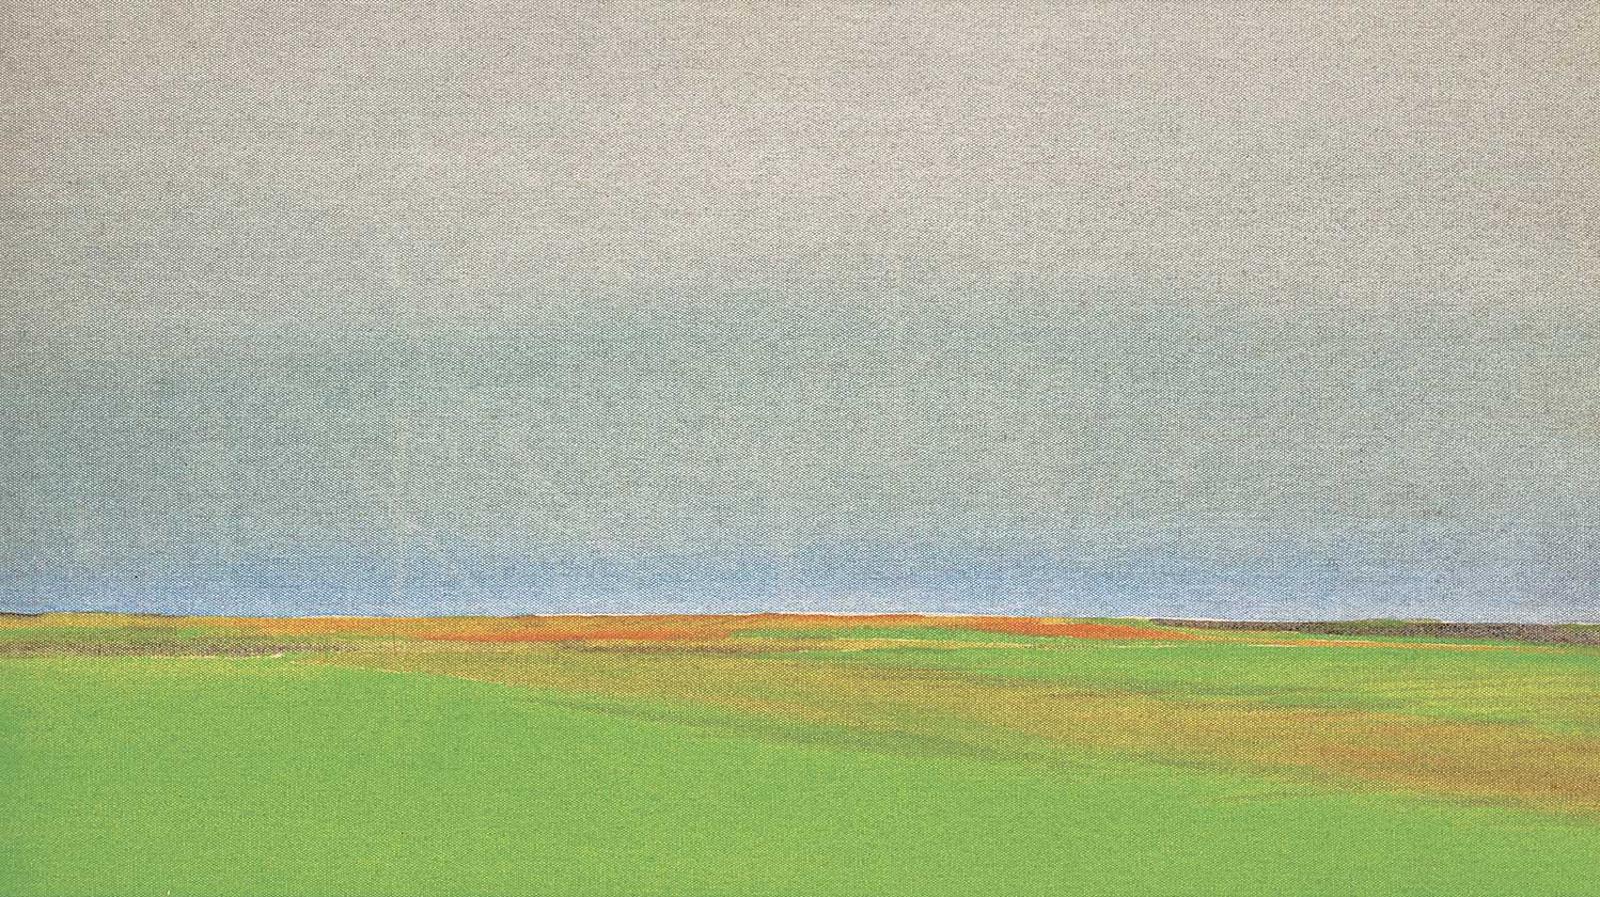 Takao Tanabe (1926) - Untitled - The Prairie